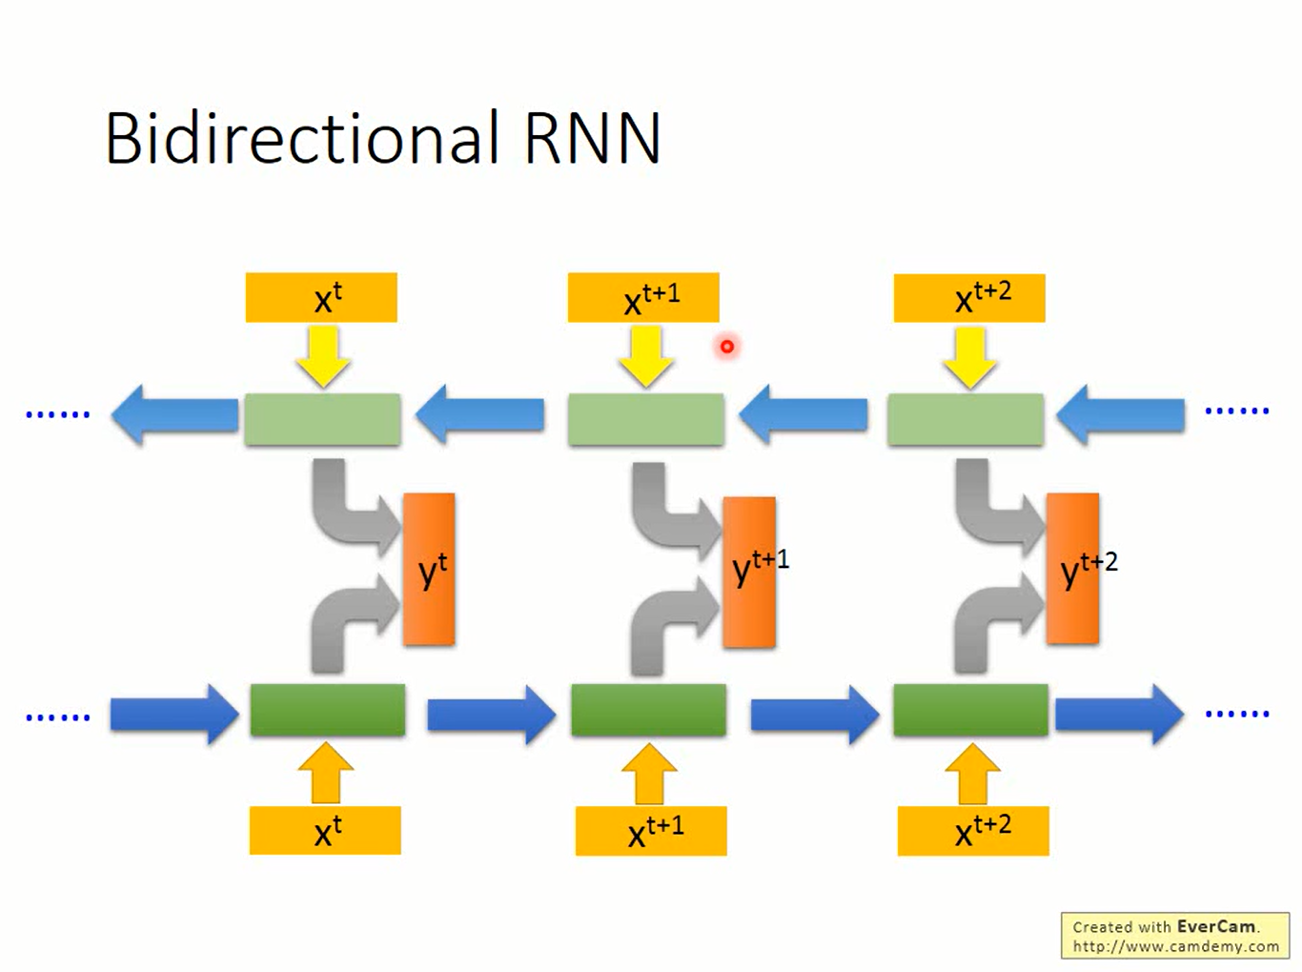 bidirectional RNN